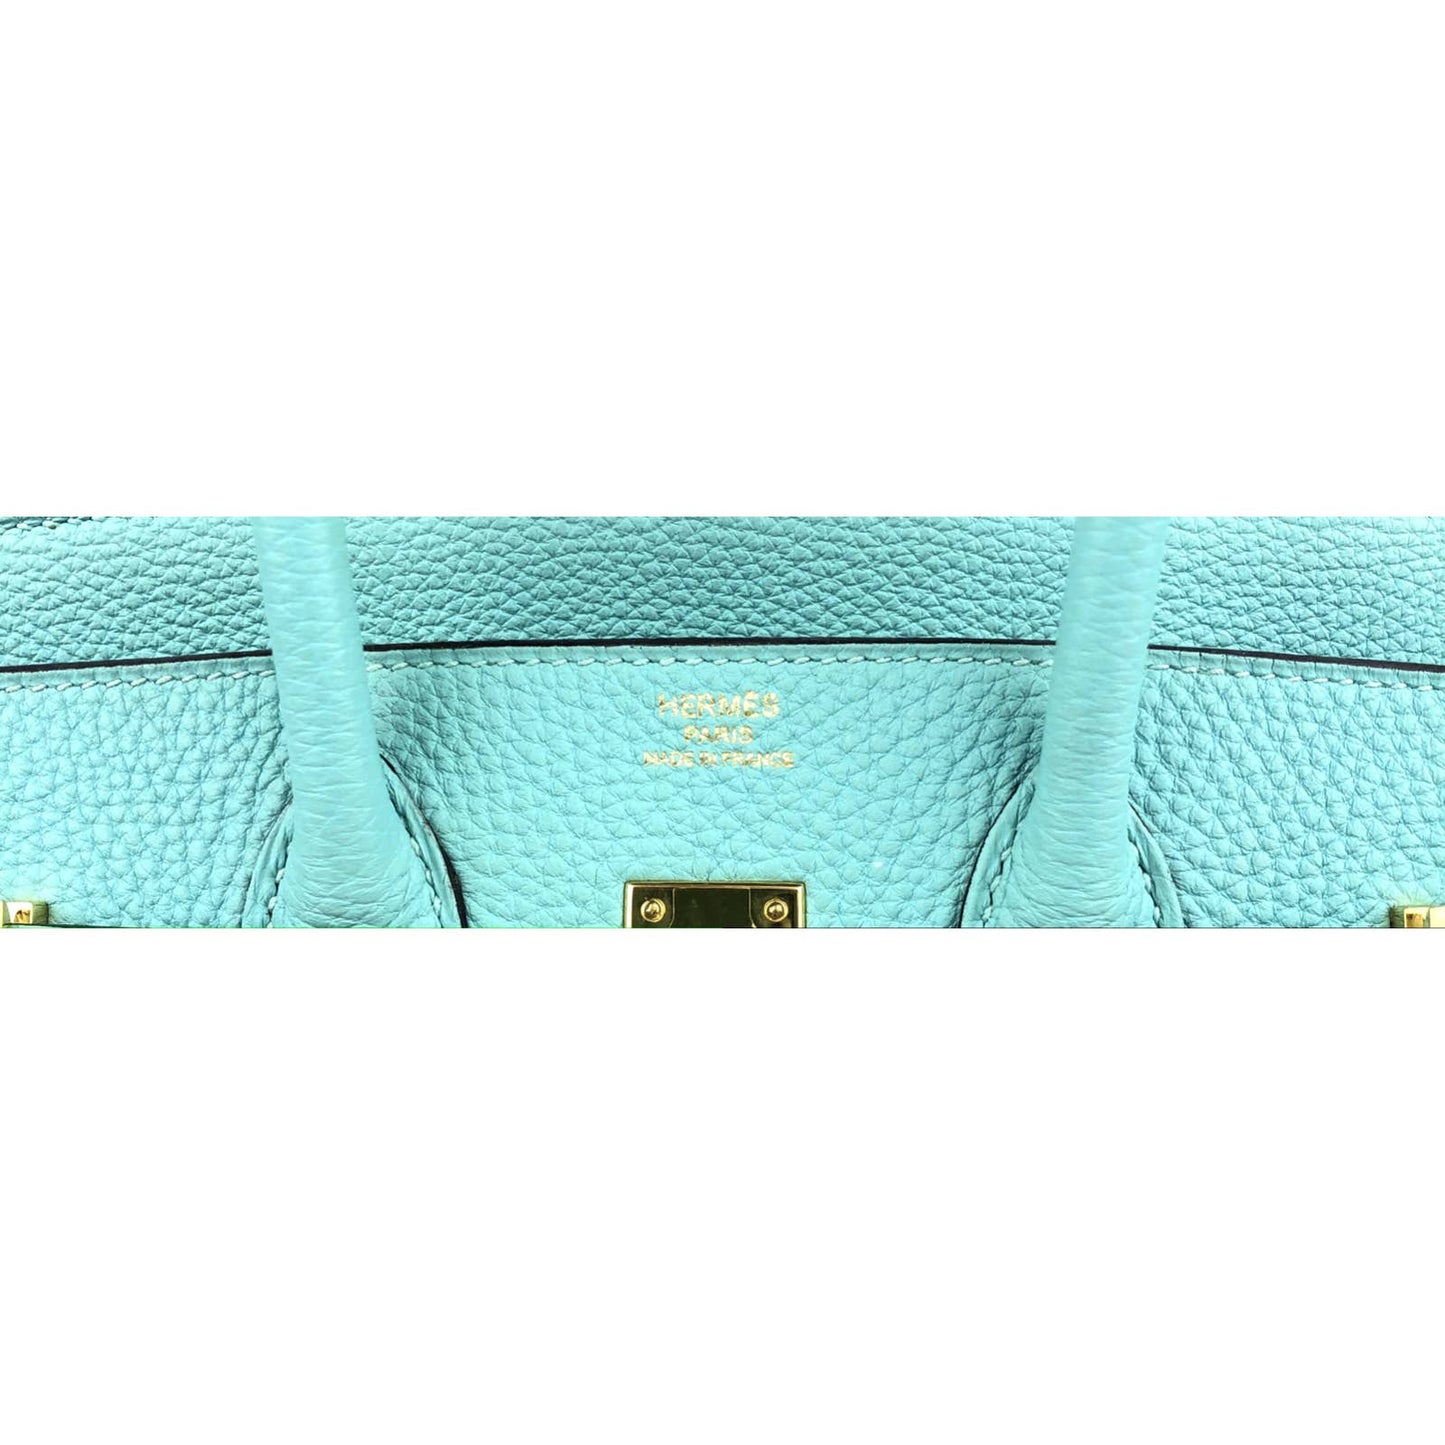 Hermes Birkin 25 Blue Atoll Tiffany Blue Togo Leather Gold Hardware Handbag Bag